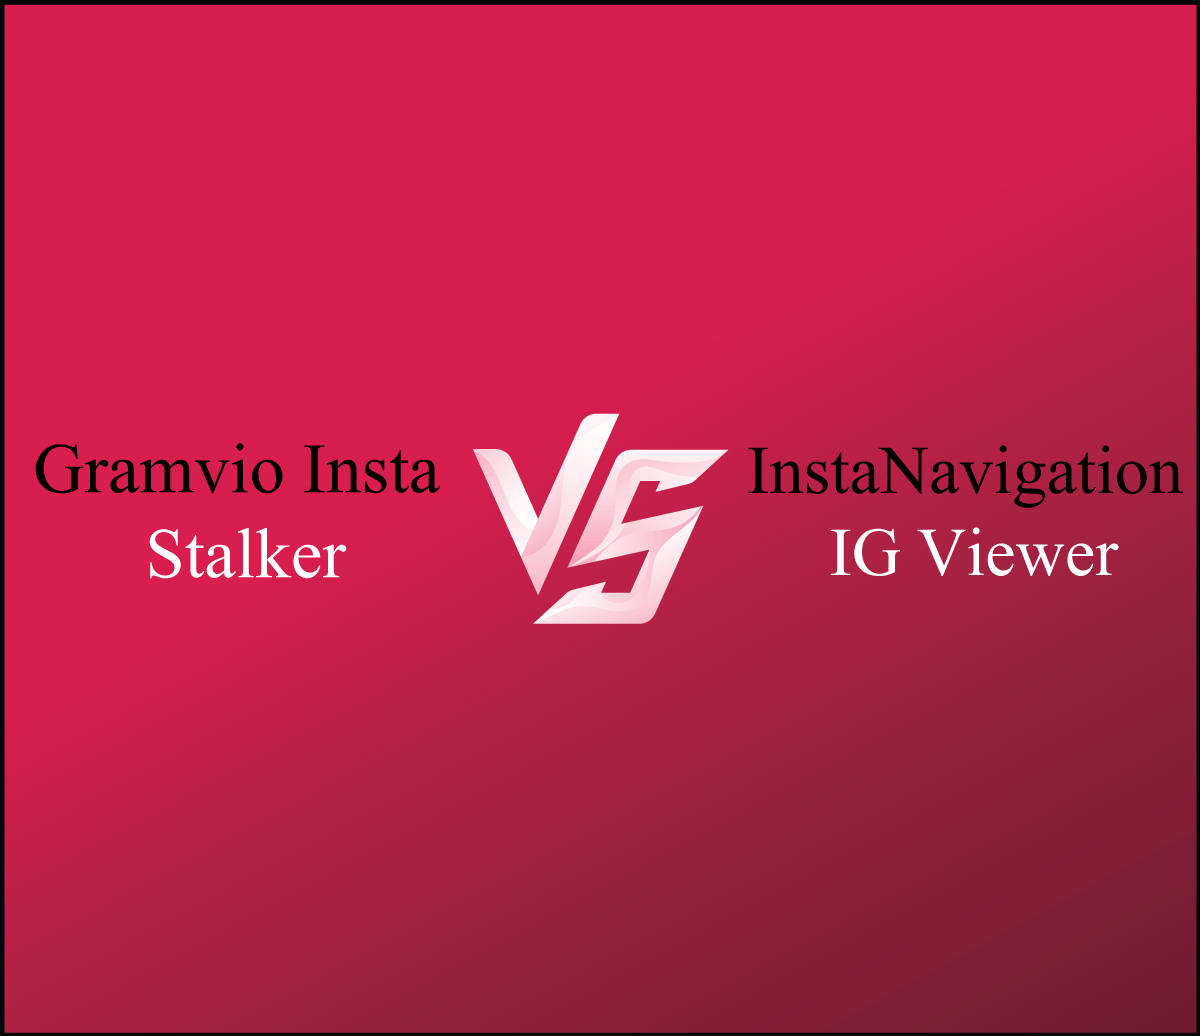 Gramvio Insta Stalker VS InstaNavigation IG Viewer